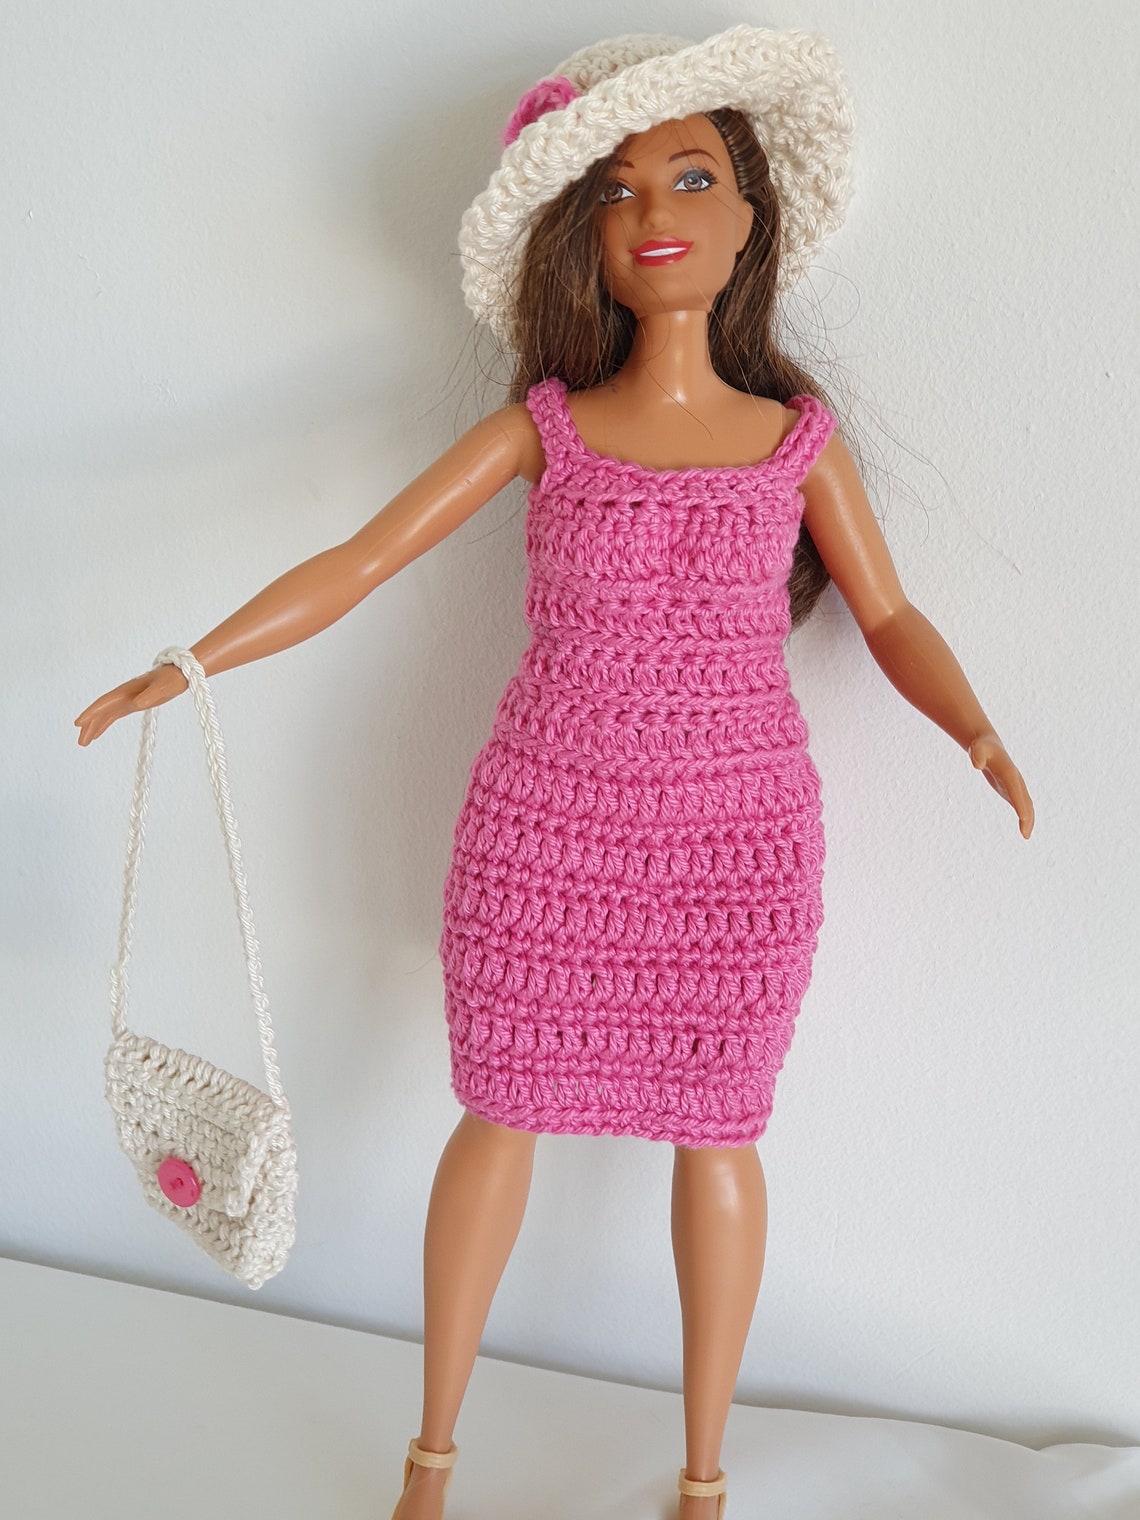 Crocheted Pink Dress Fits Barbie